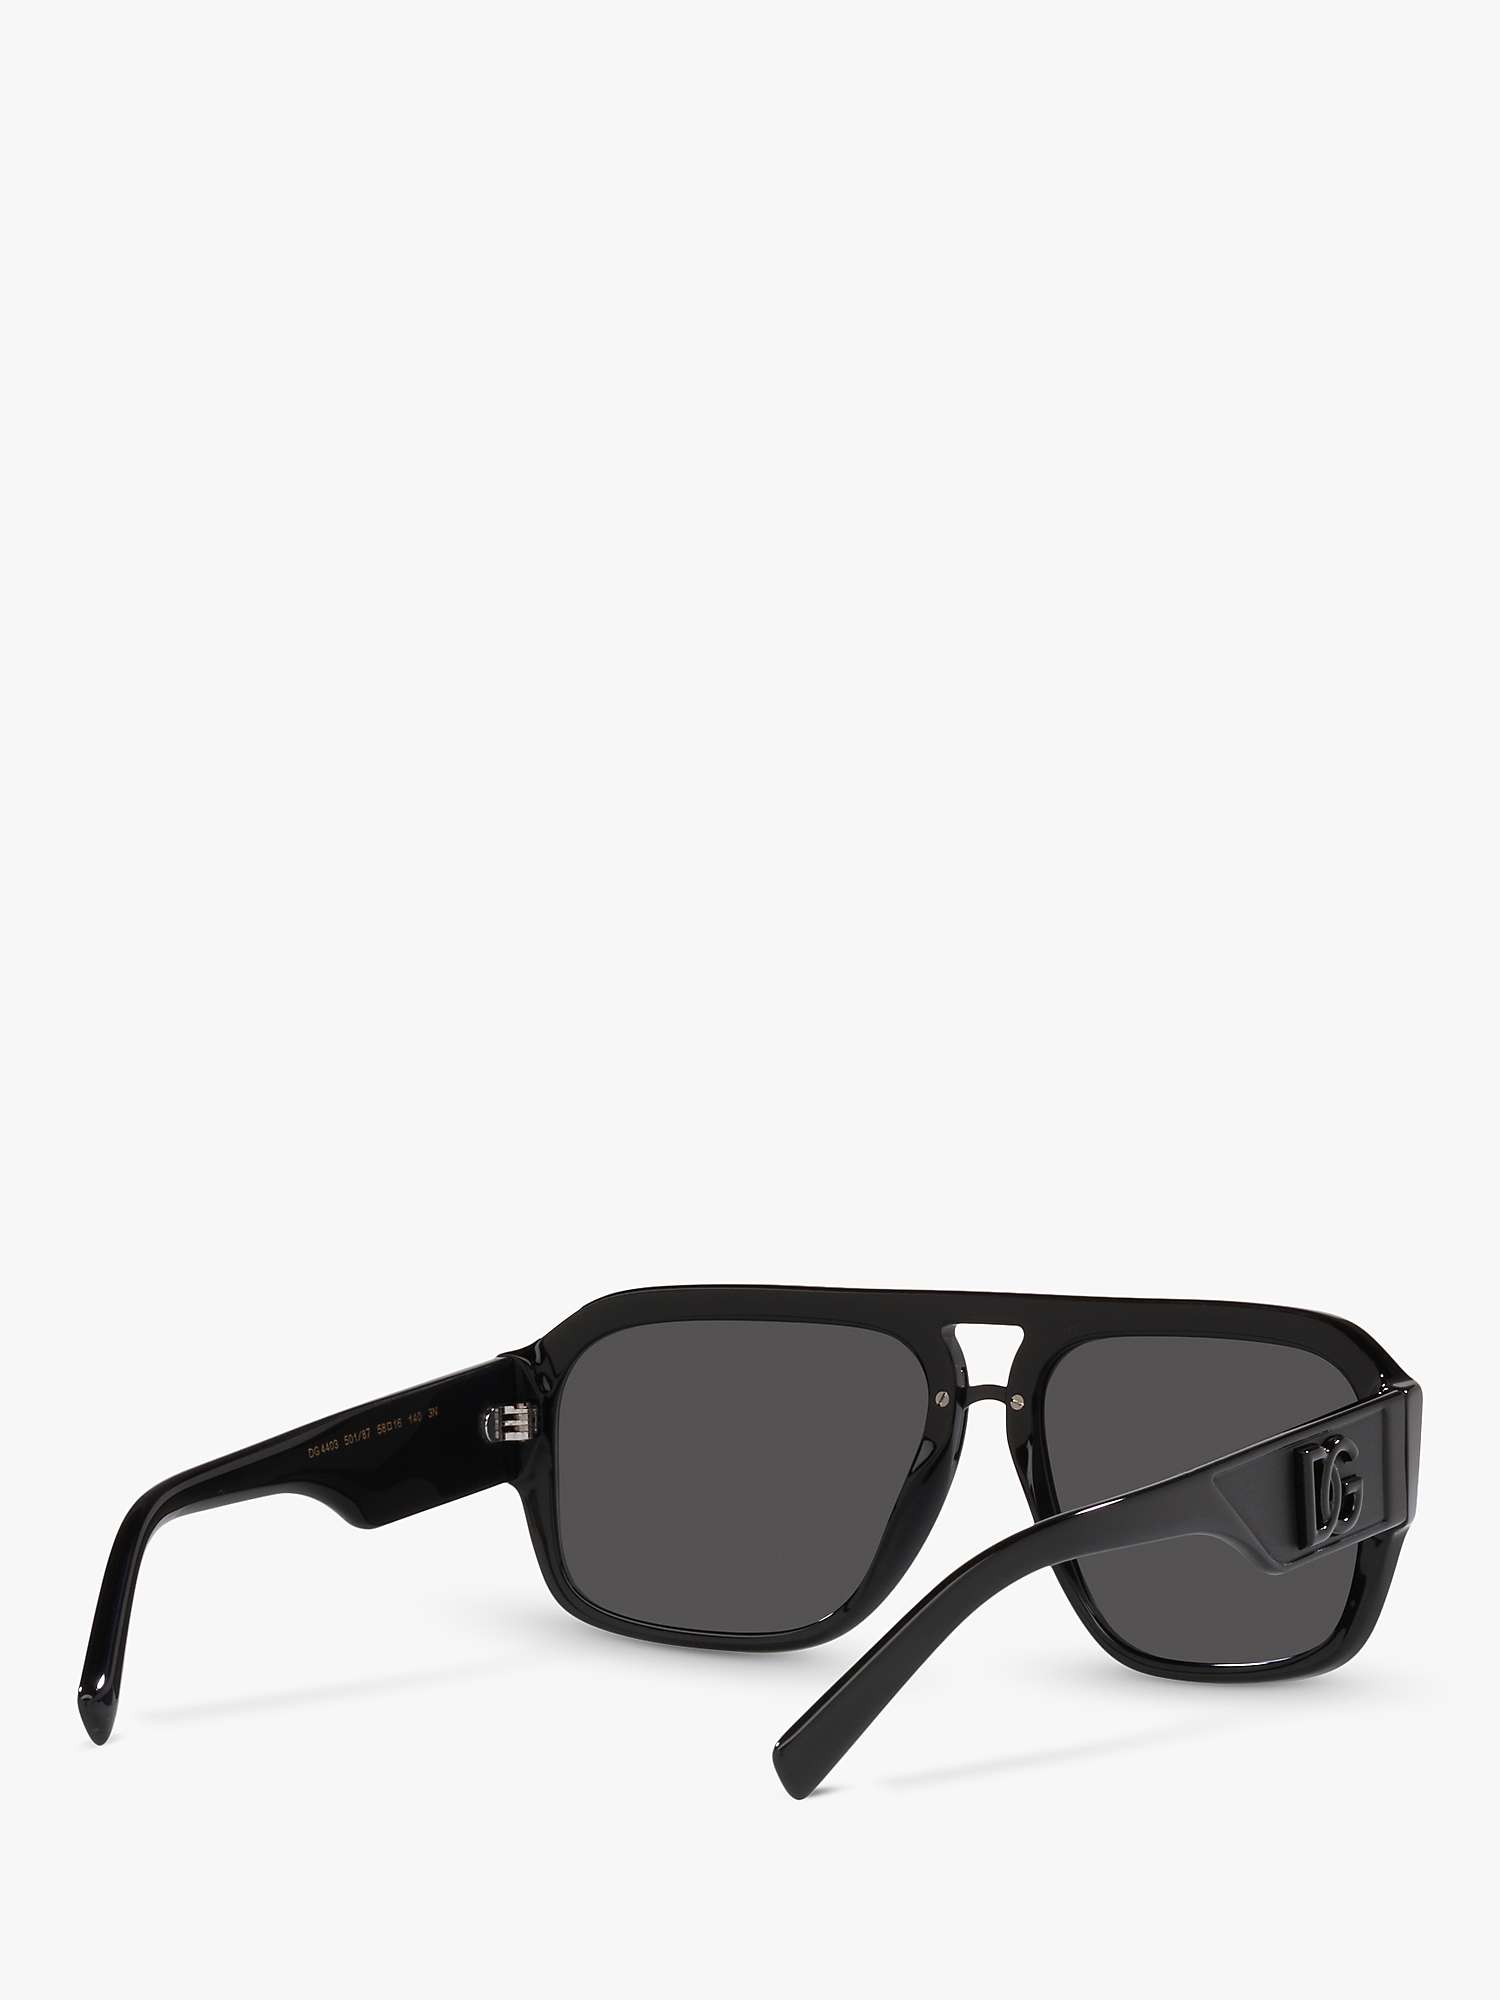 Buy Dolce & Gabbana DG4403 Men's Aviator Sunglasses, Black/Grey Online at johnlewis.com